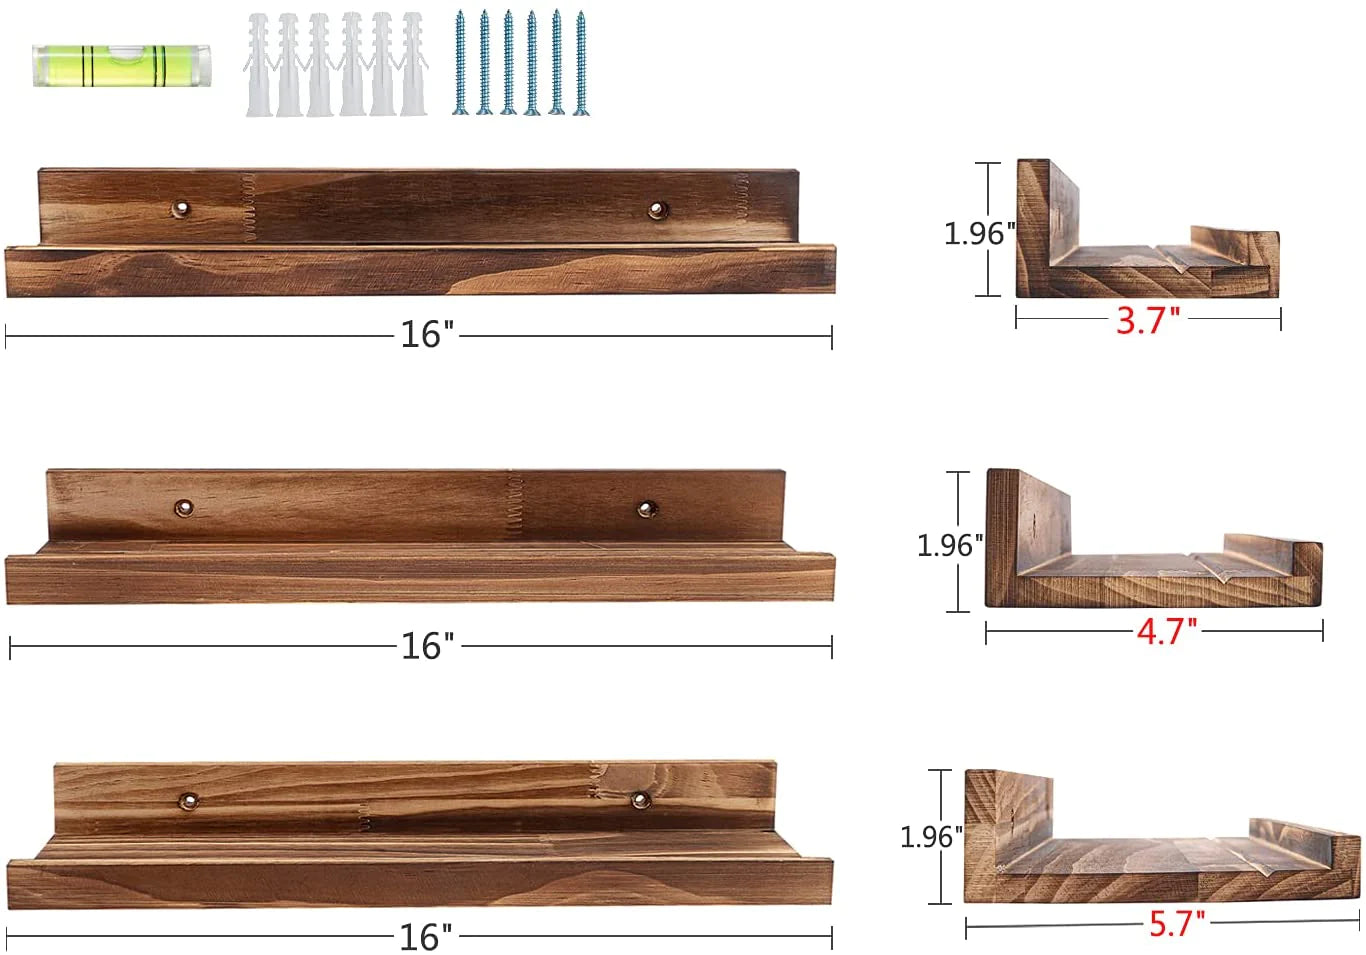 Wall Shelves: Set of 3 ,Picture Ledge Shelf Wood for Office,Living Room, Kitchen